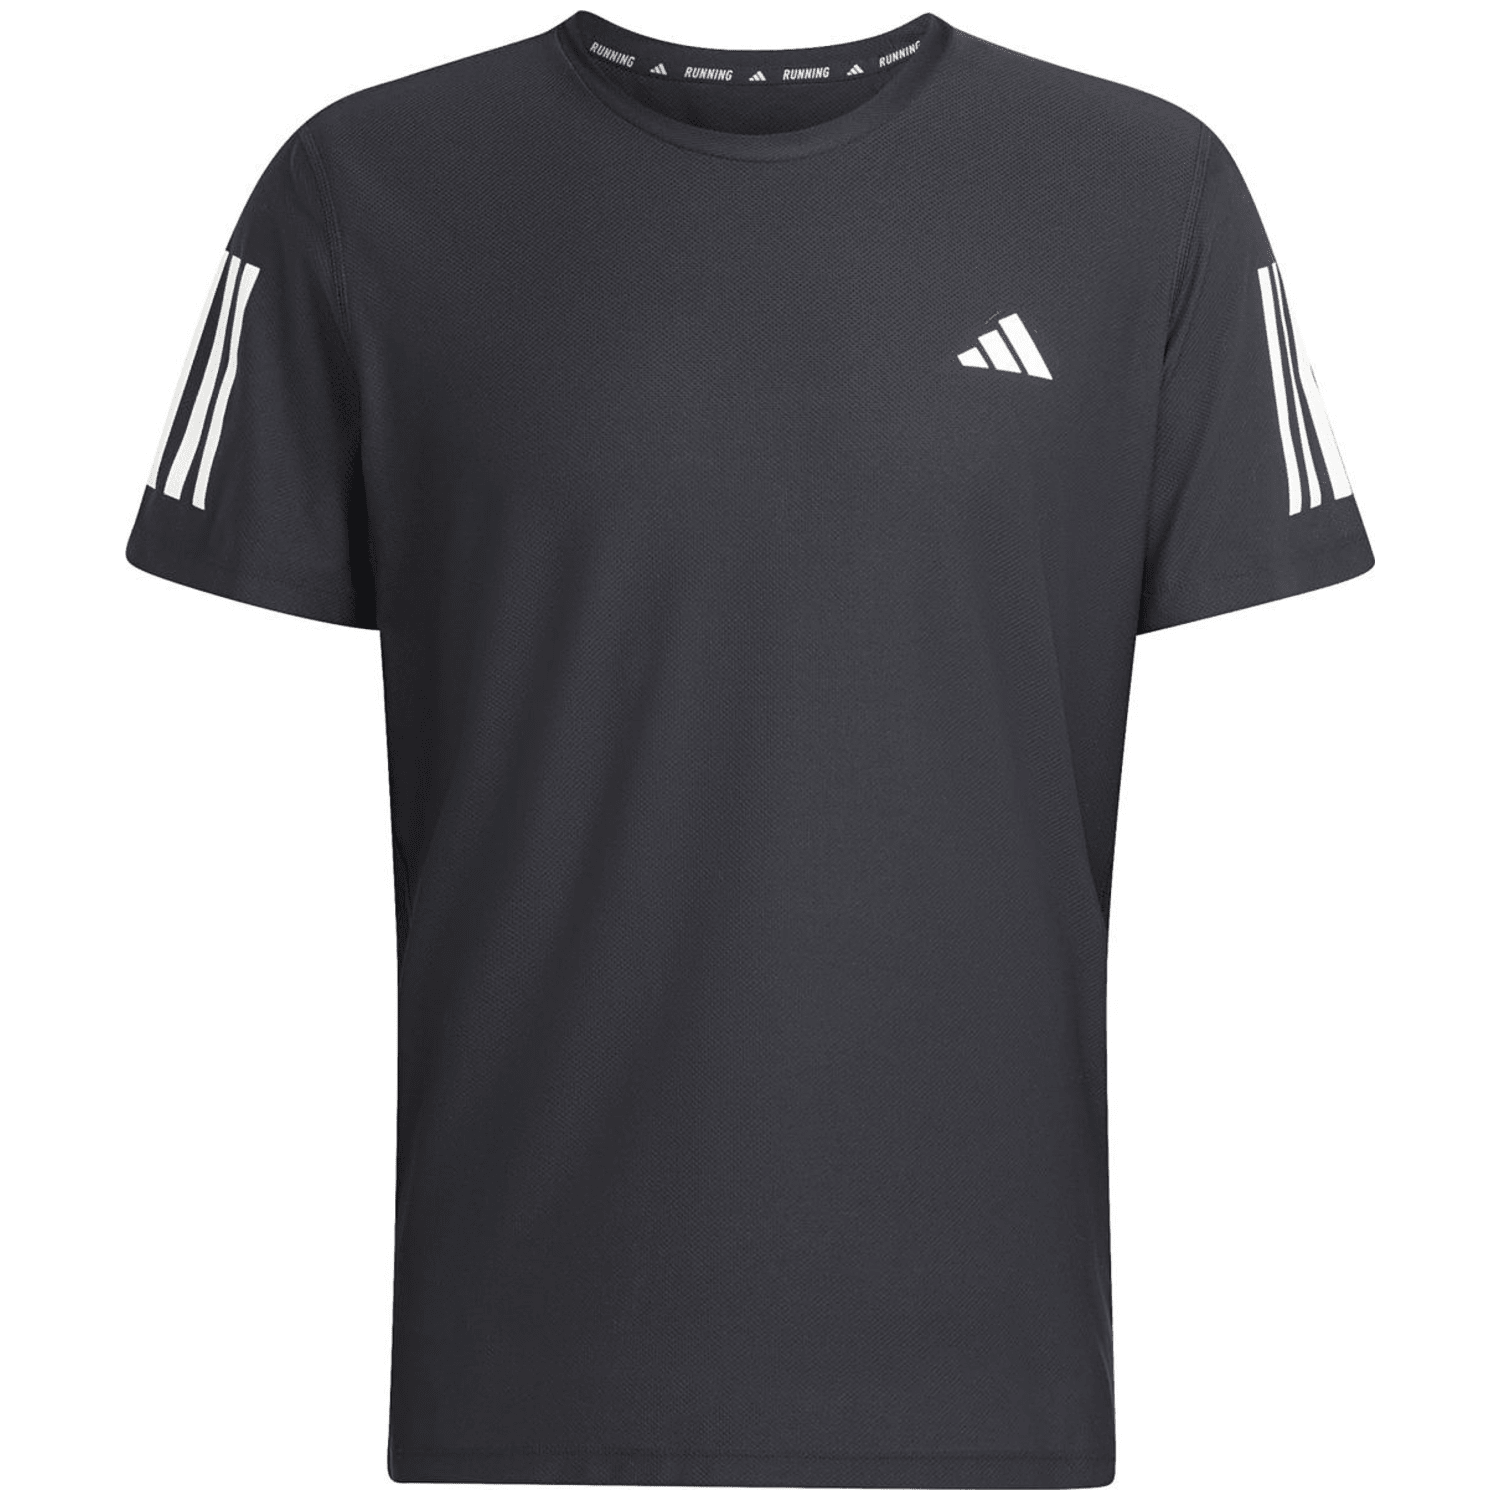 Adidas Own the Run T-Shirt Herren